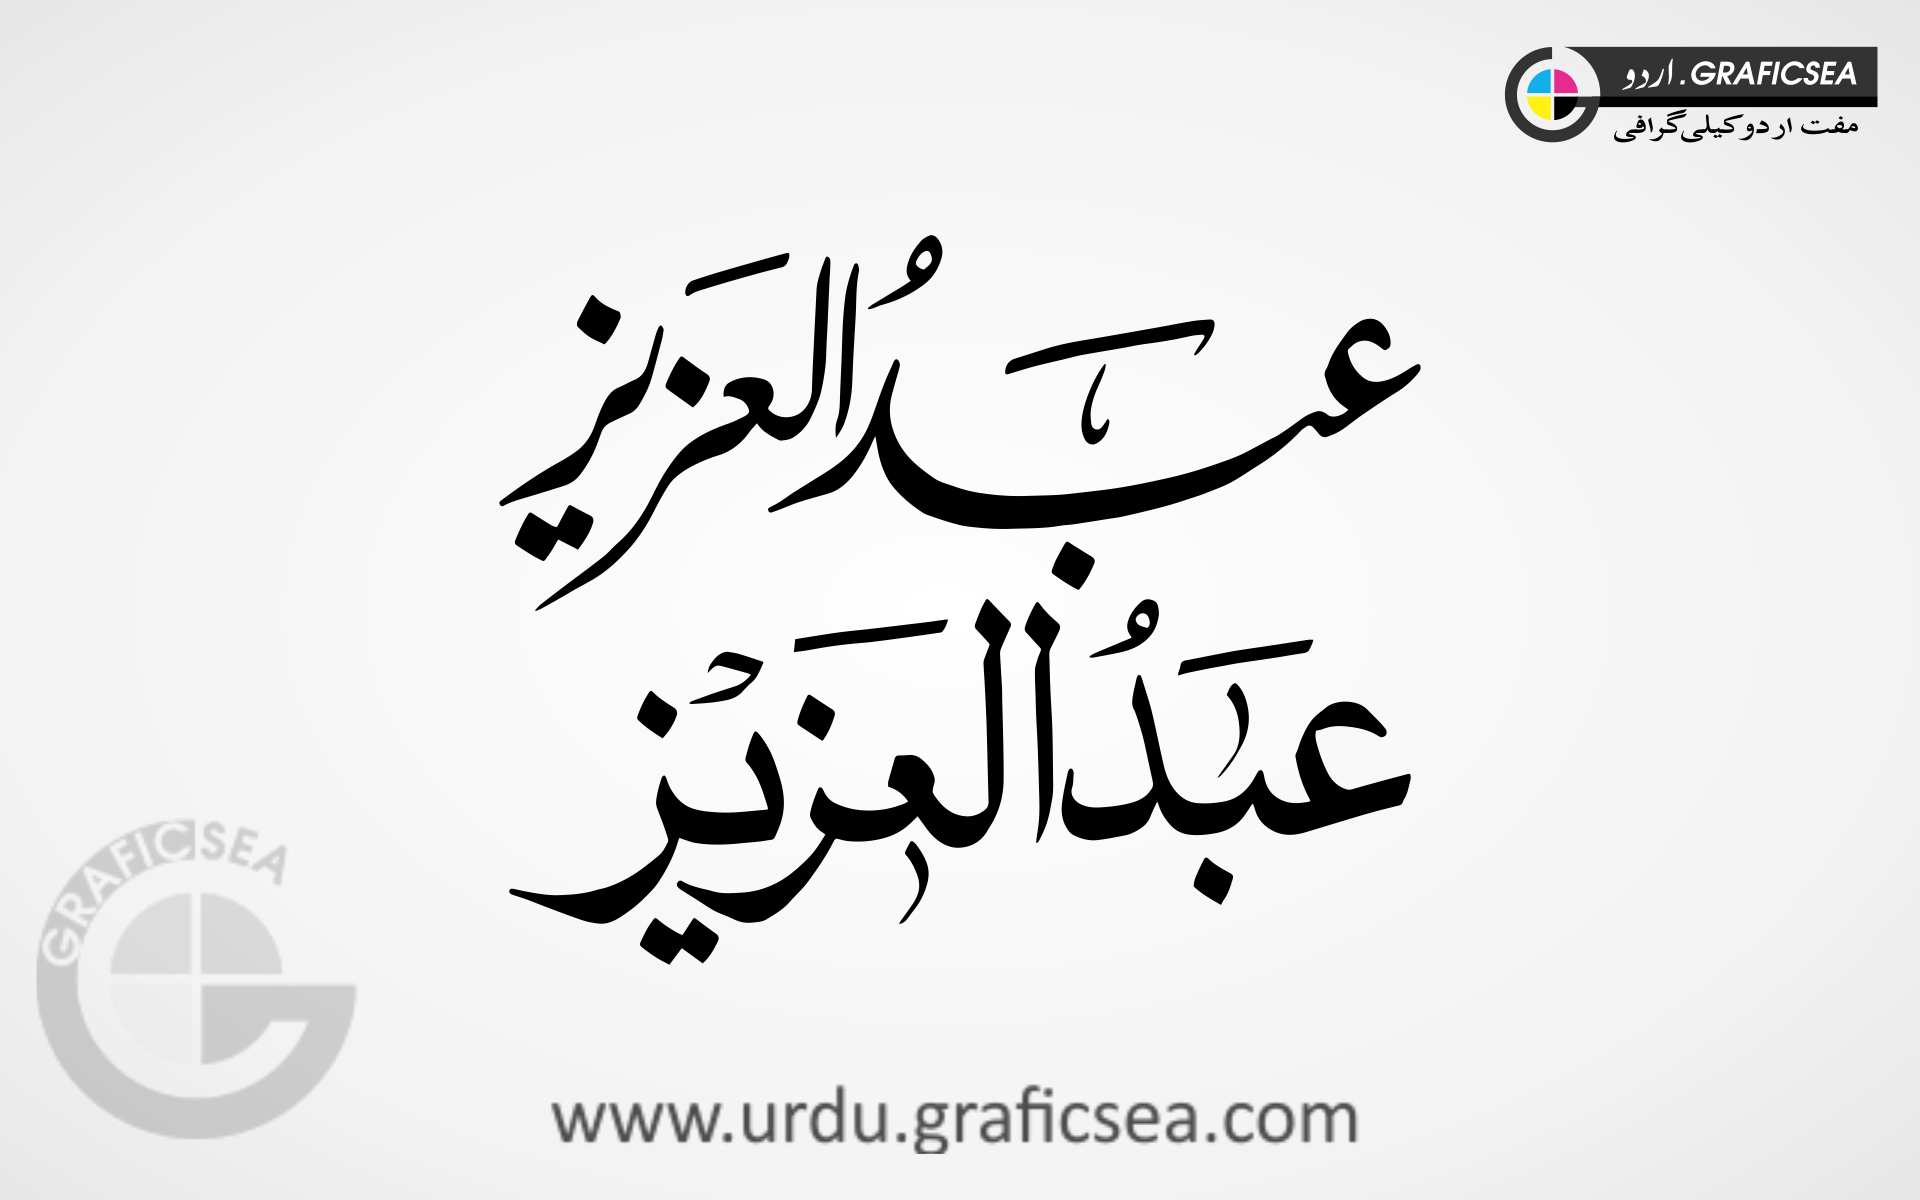 Boy Name Abdul Aziz Urdu Calligraphy